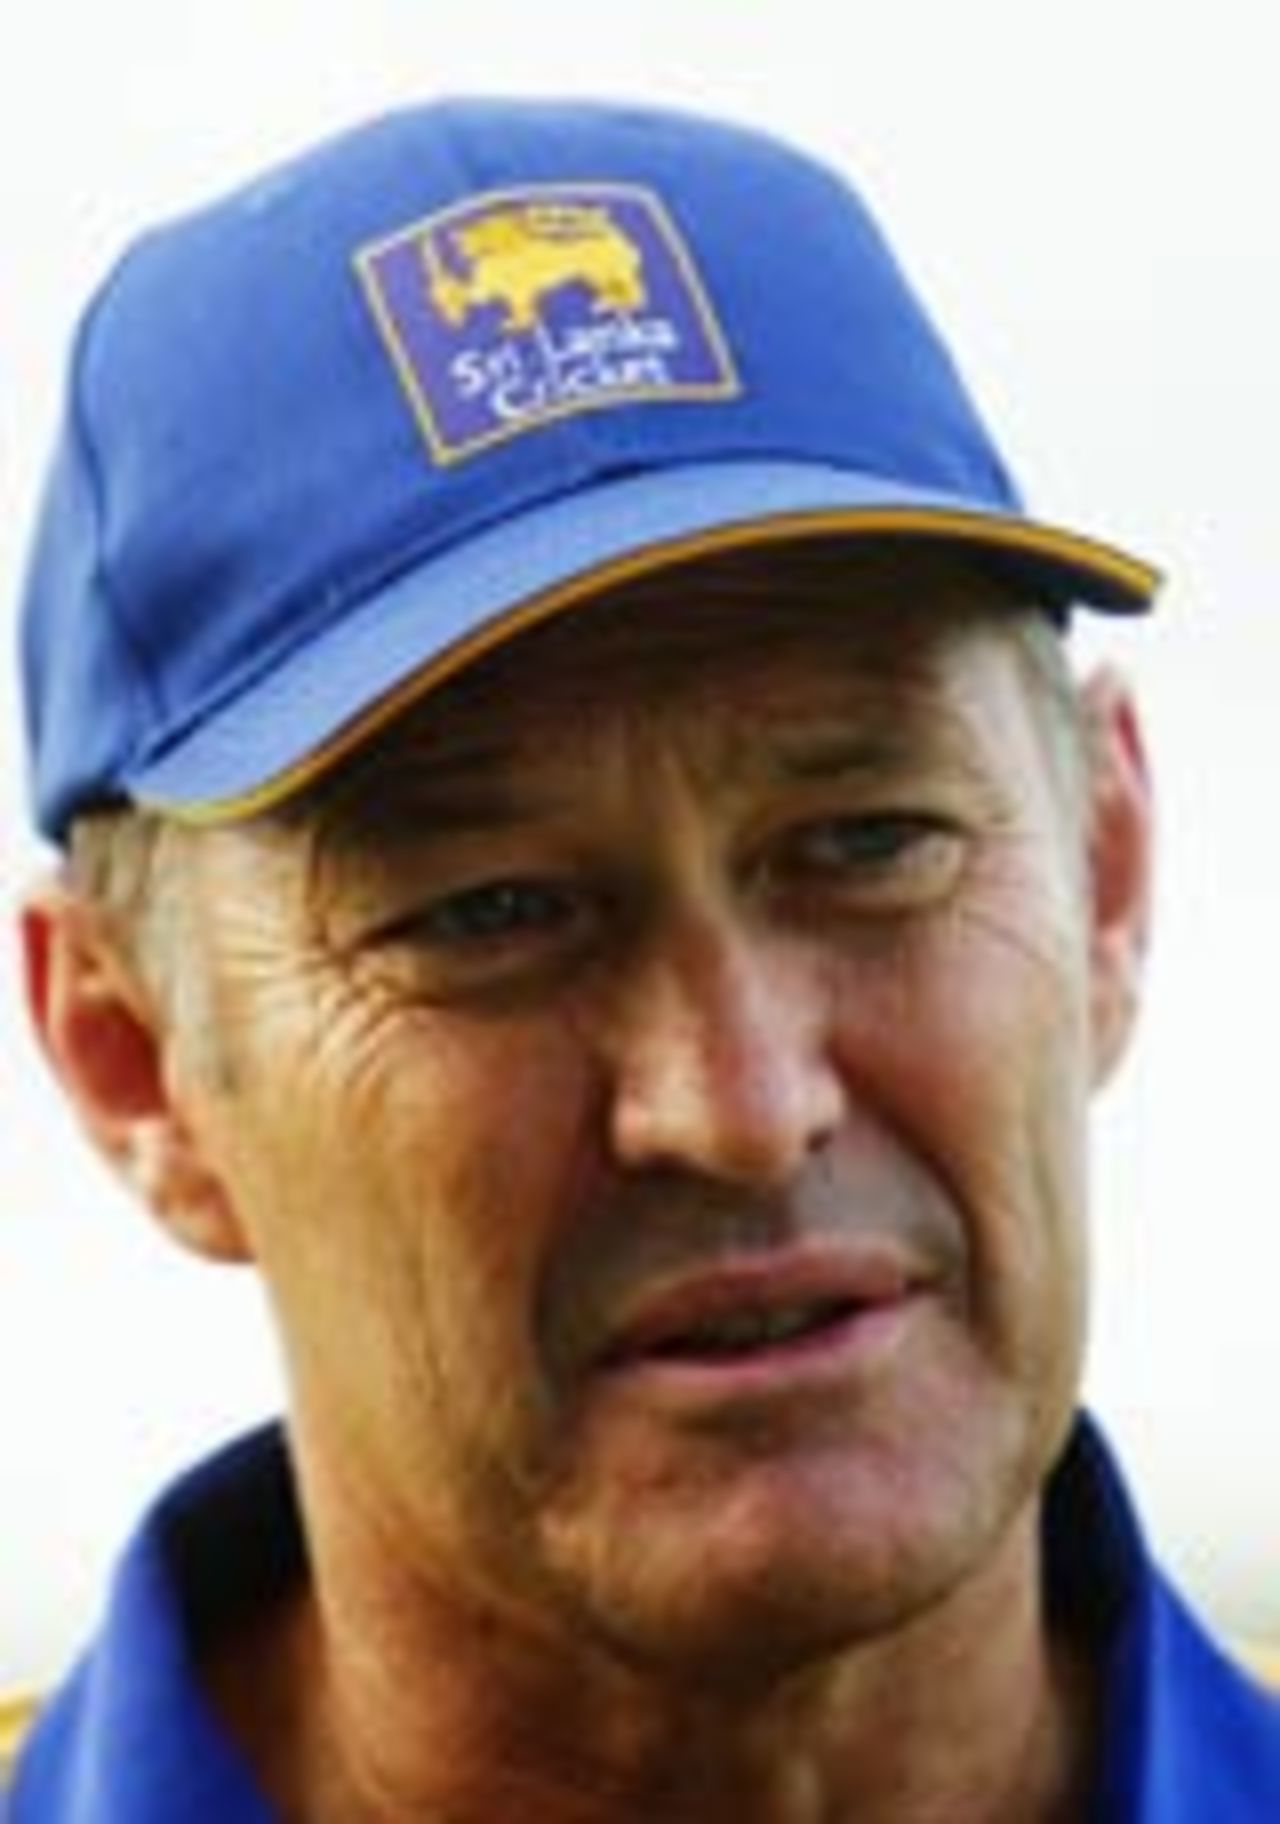 Profile of John Dyson, coach of the Sri Lankan team, November 18, 2003